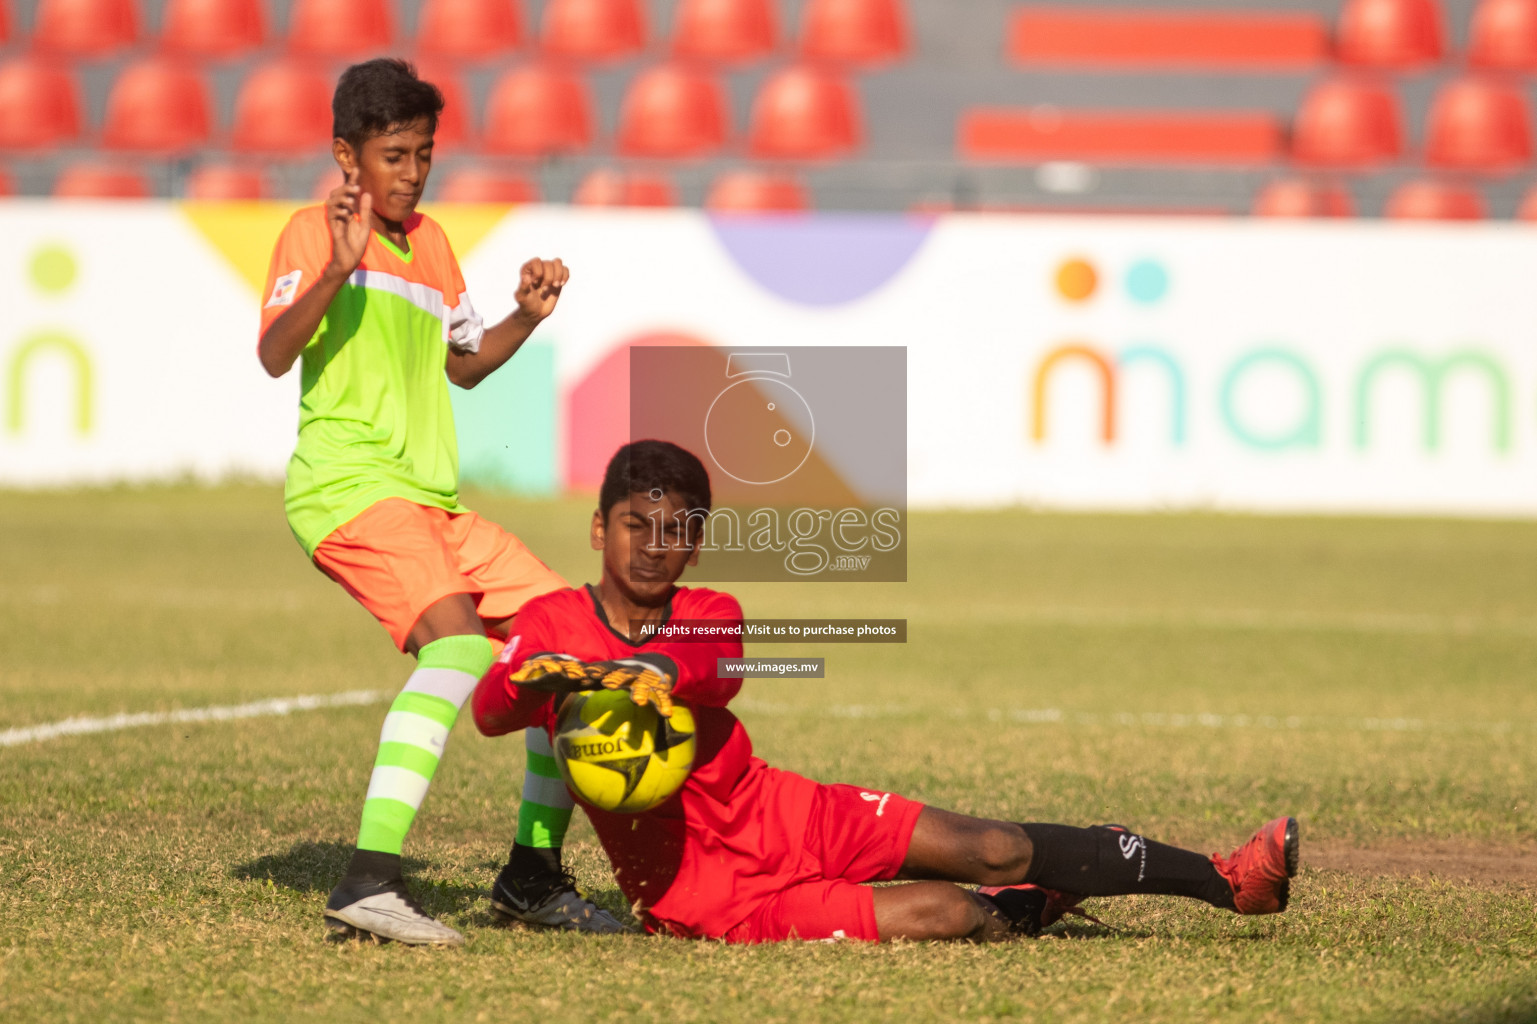 Dharumavantha School vs Ghaazee School in Mamen Inter-School Football Tournament 2019 (U15) on 10th March 2019, in Male' Maldives (Images.mv Photo: Hassan Simah)